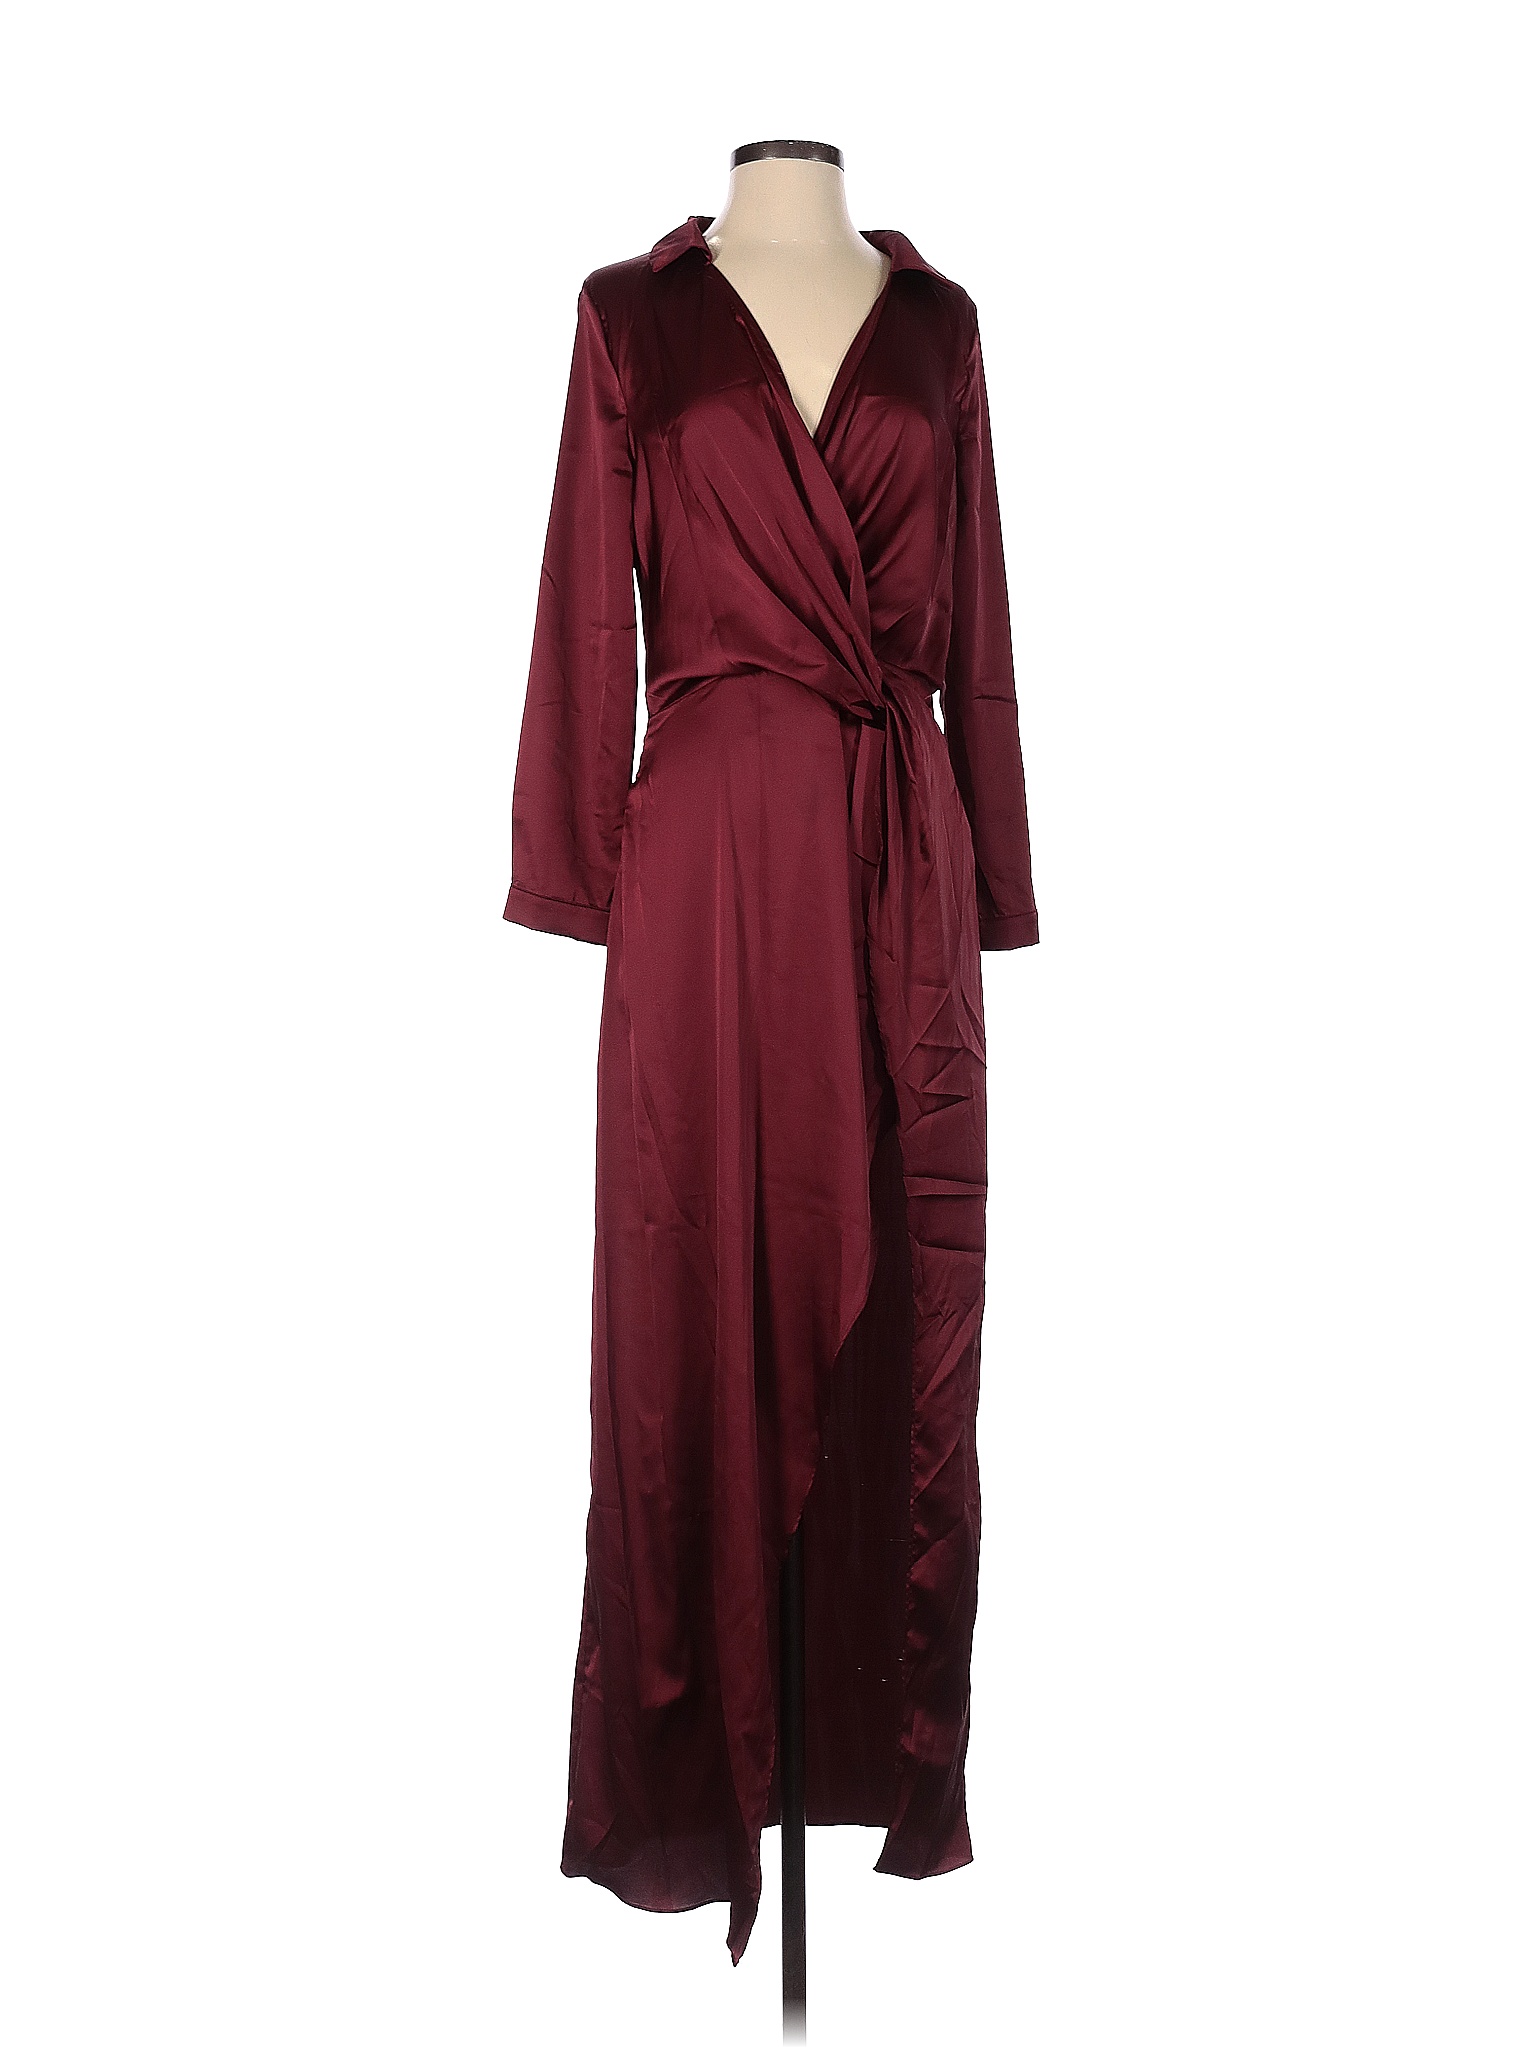 Shein Solid Maroon Burgundy Cocktail Dress Size S - 62% off | thredUP